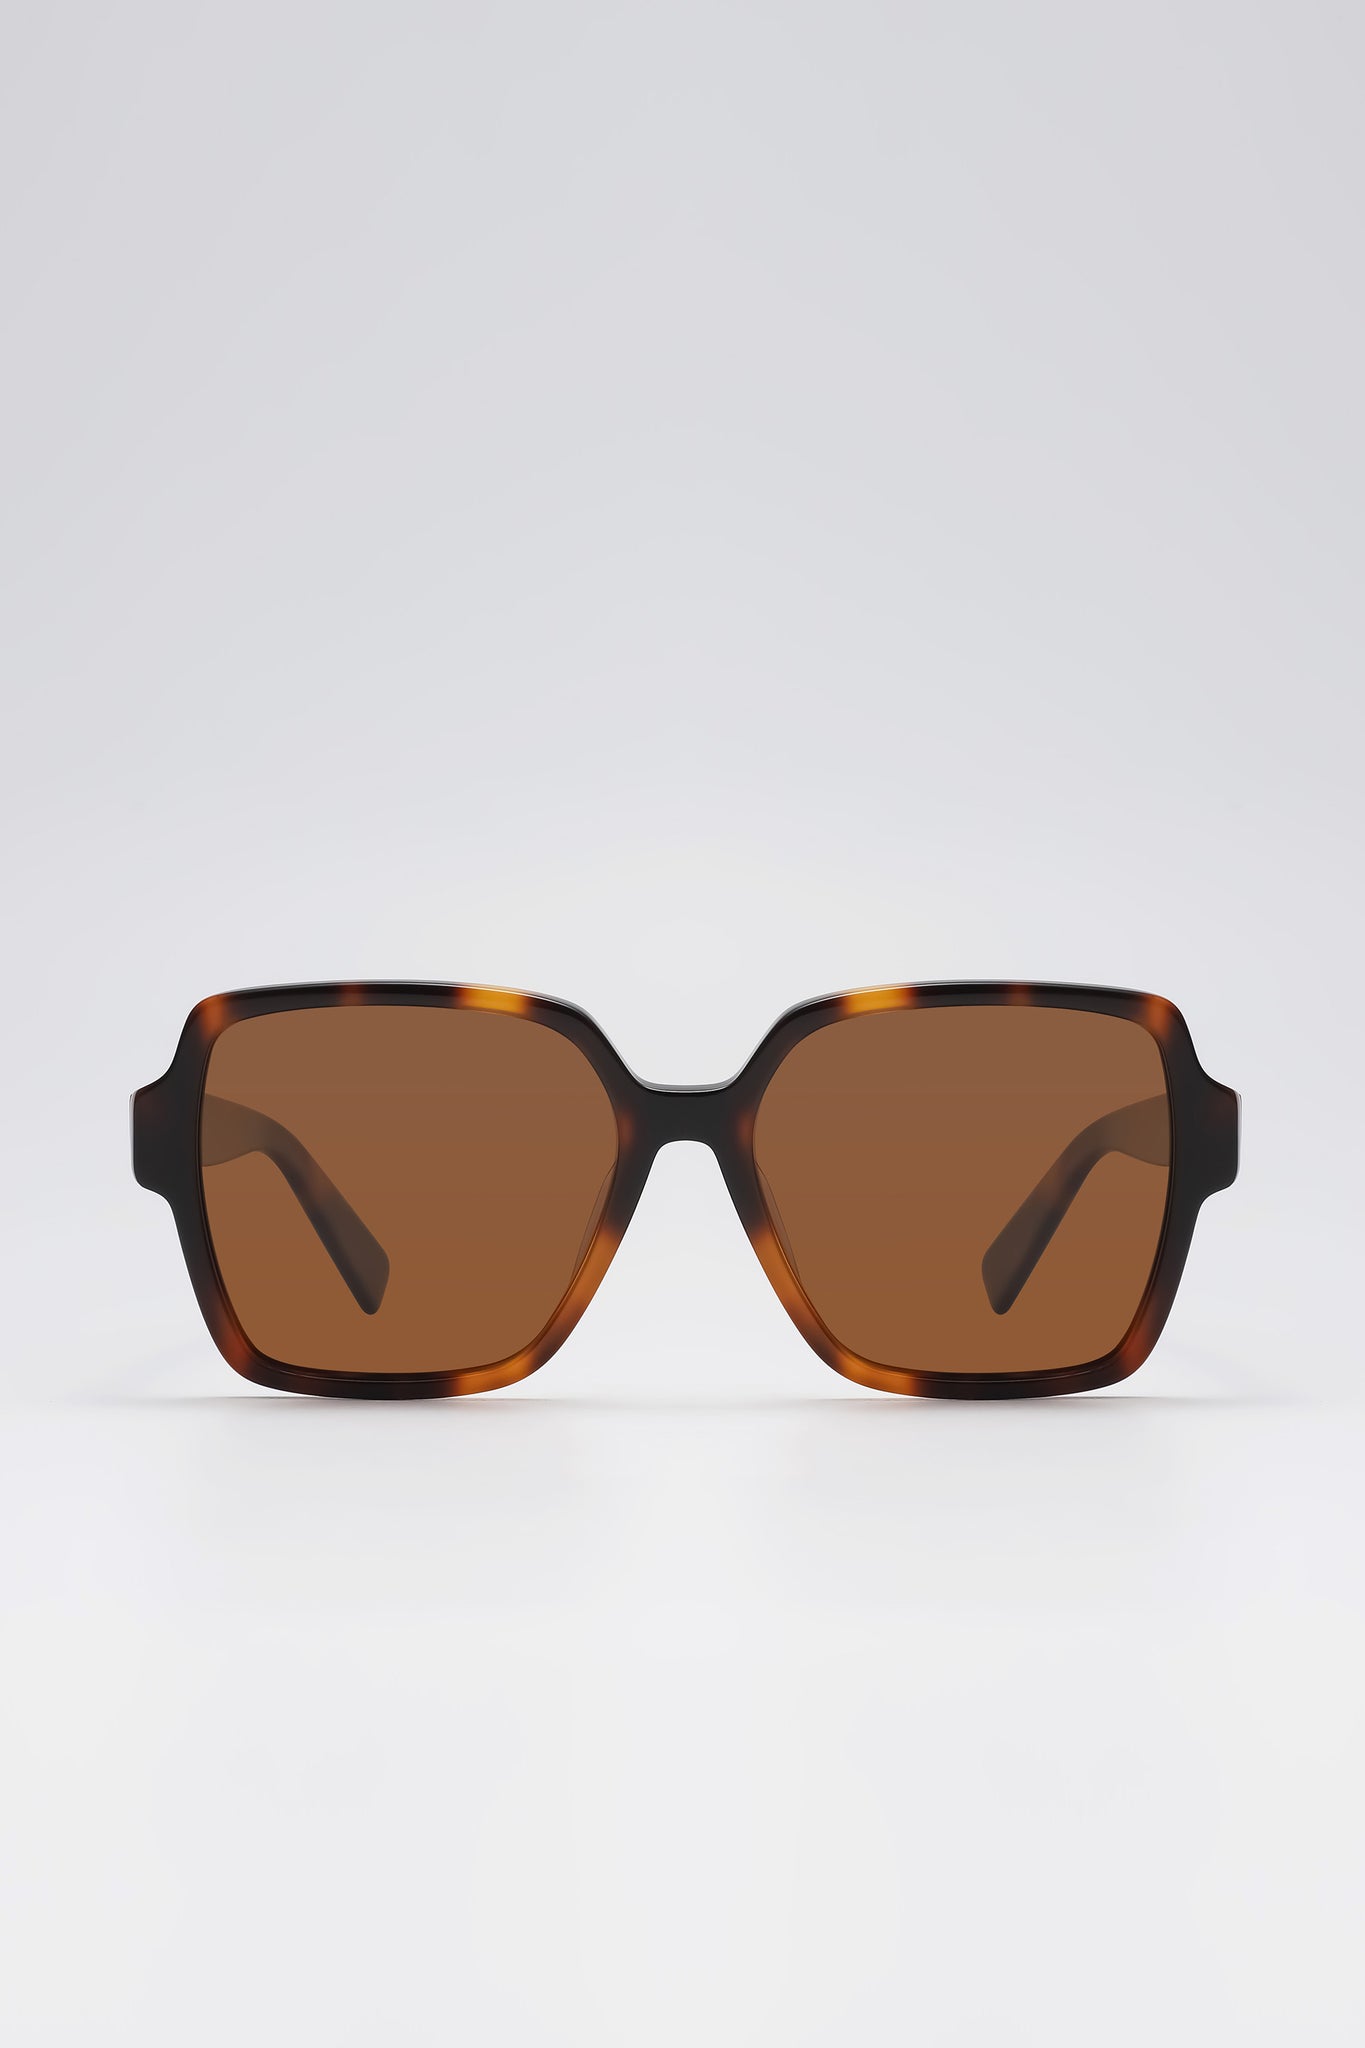 Fangyan | Rectangular Oversized  Brown Sunglasses